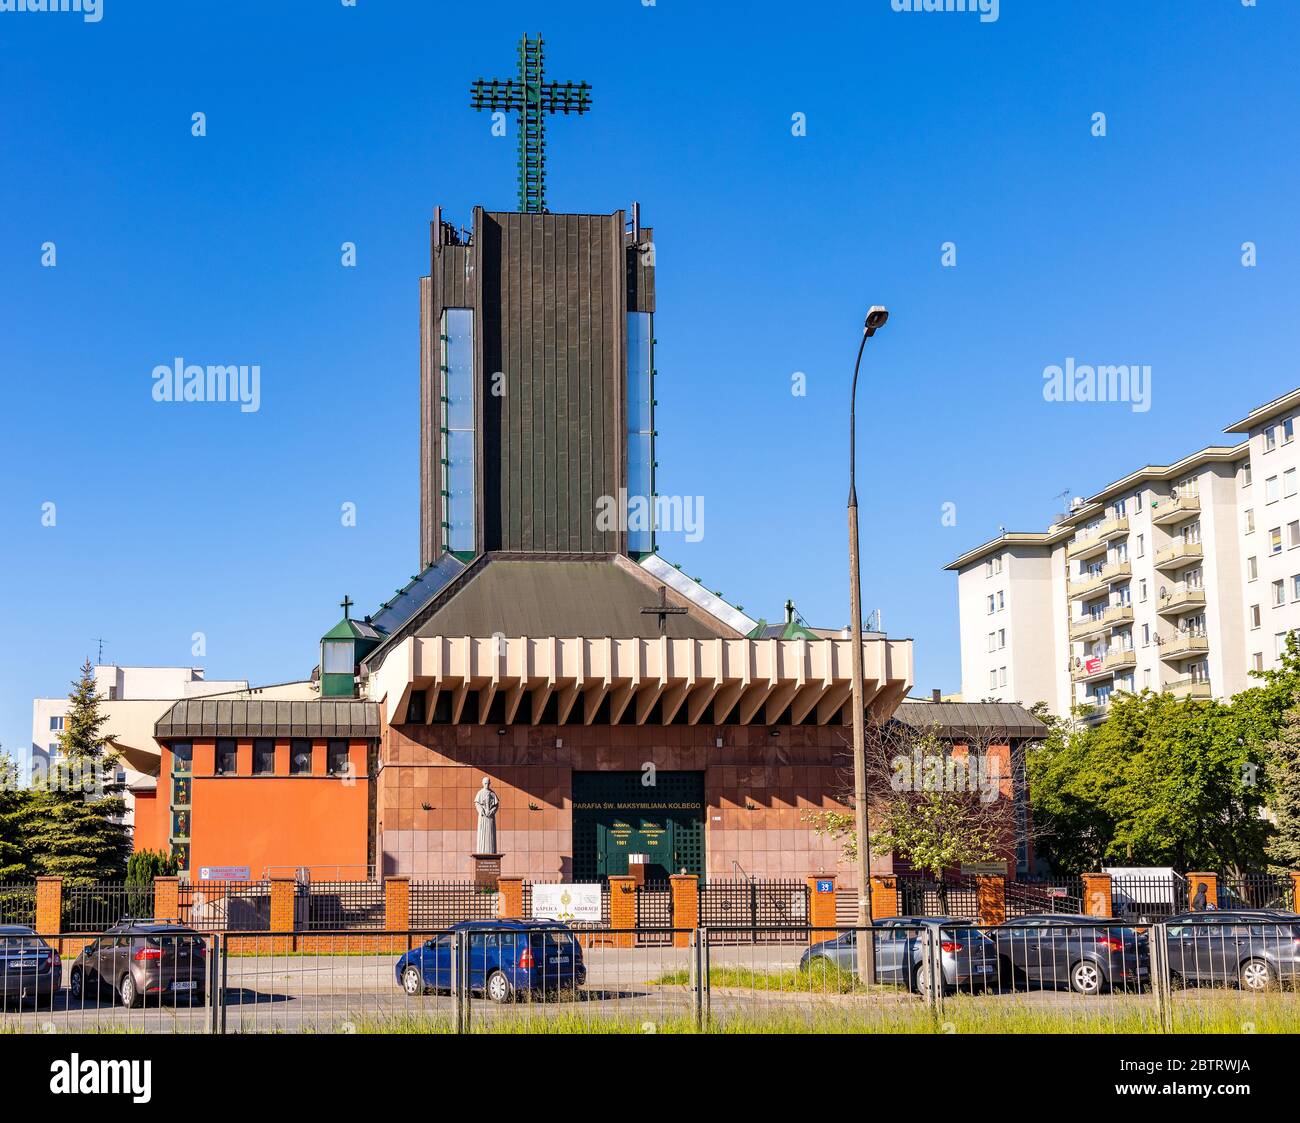 Varsavia, Mazovia / Polonia - 2020/05/21: Facciata della chiesa di San Massimiliano Colbe - kosciol sw. Maksymiliana Kolbe - a ul. Via Rzymowskiego a Moko Foto Stock